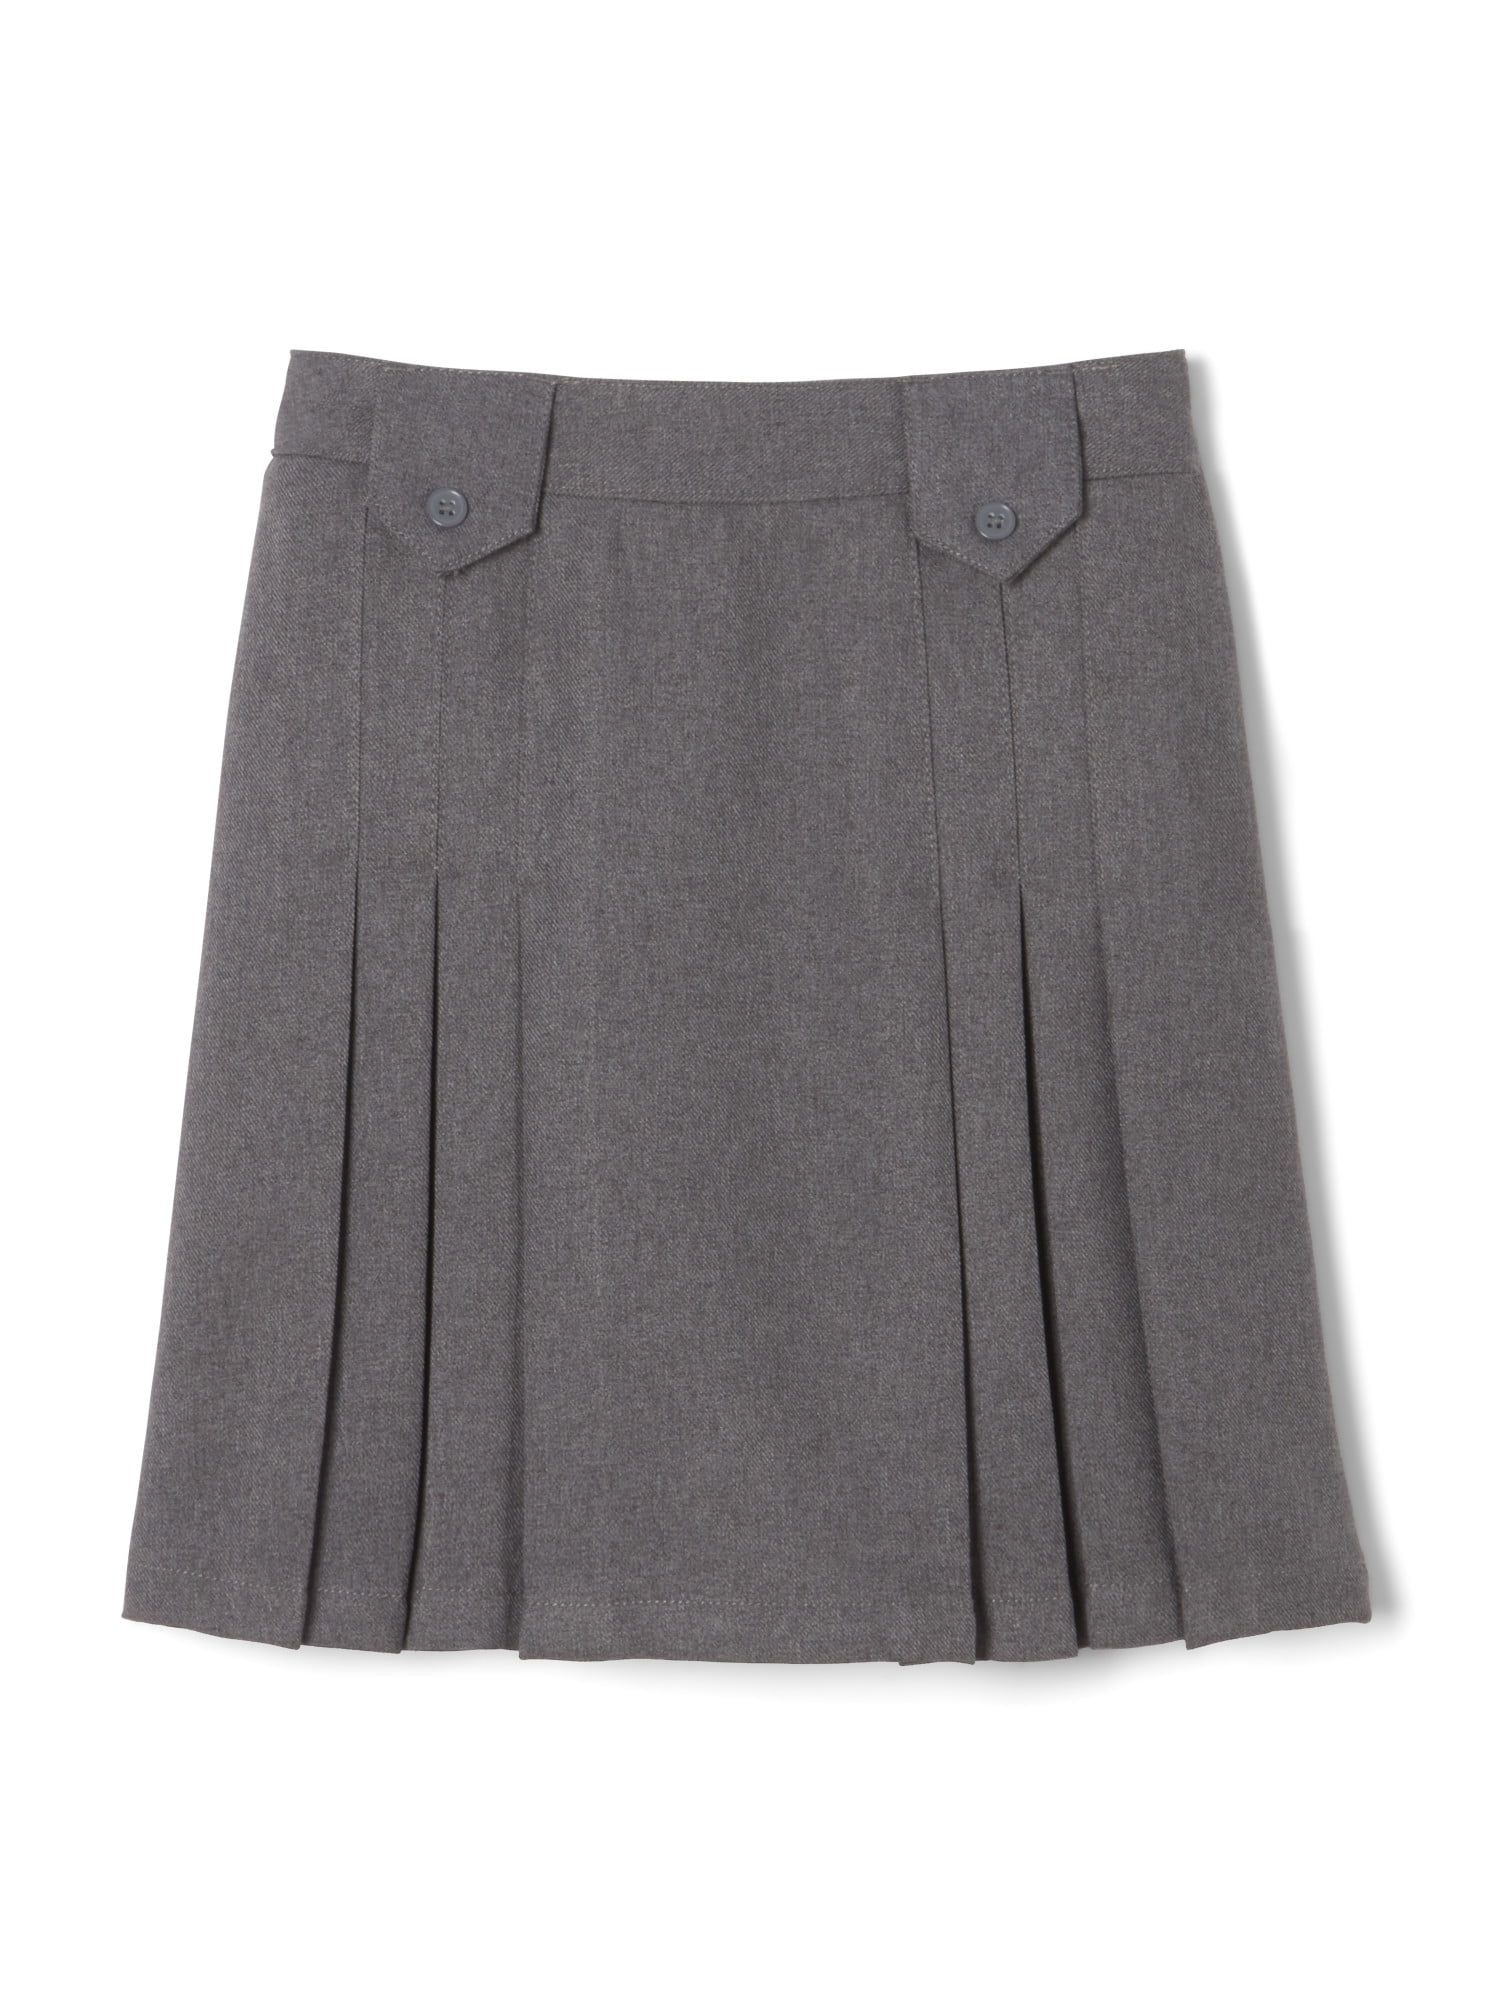 Little Girls School Uniform Adjustable Waist Pleated Skirt ,Sizes 3-8T,Gray,4-5  Years Old - Walmart.com